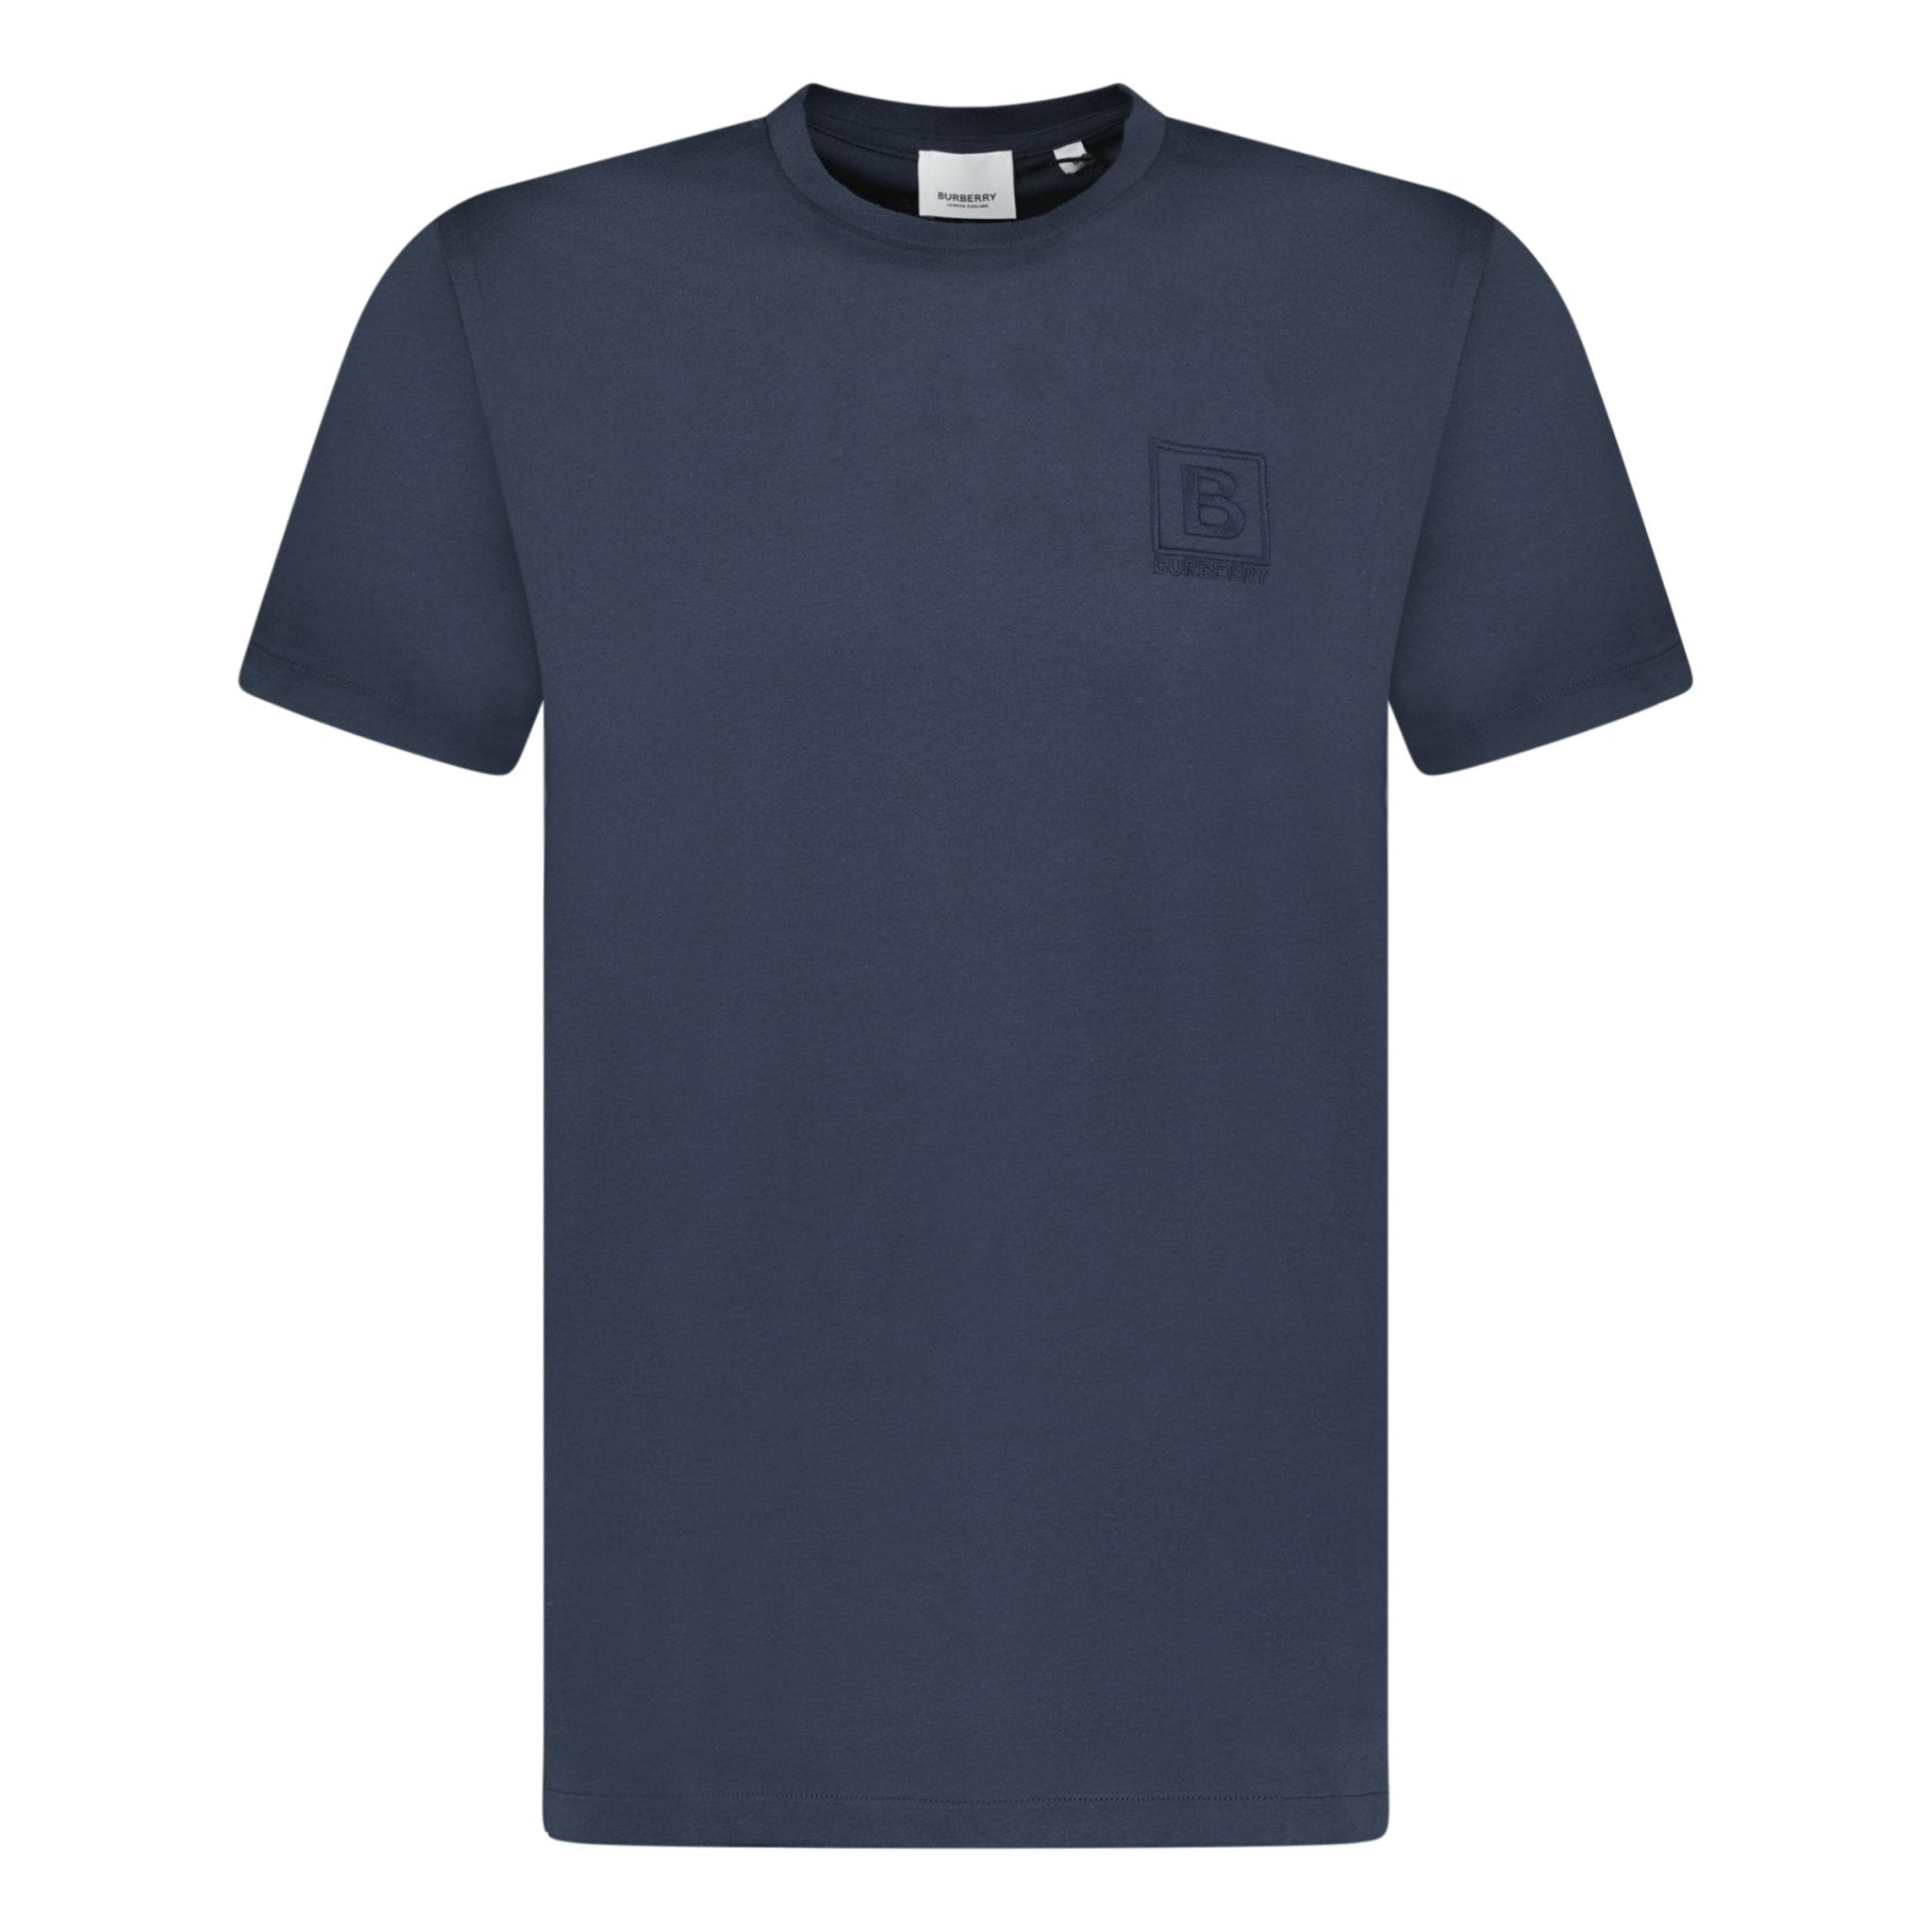 Burberry 'Jenson' T-Shirt Navy